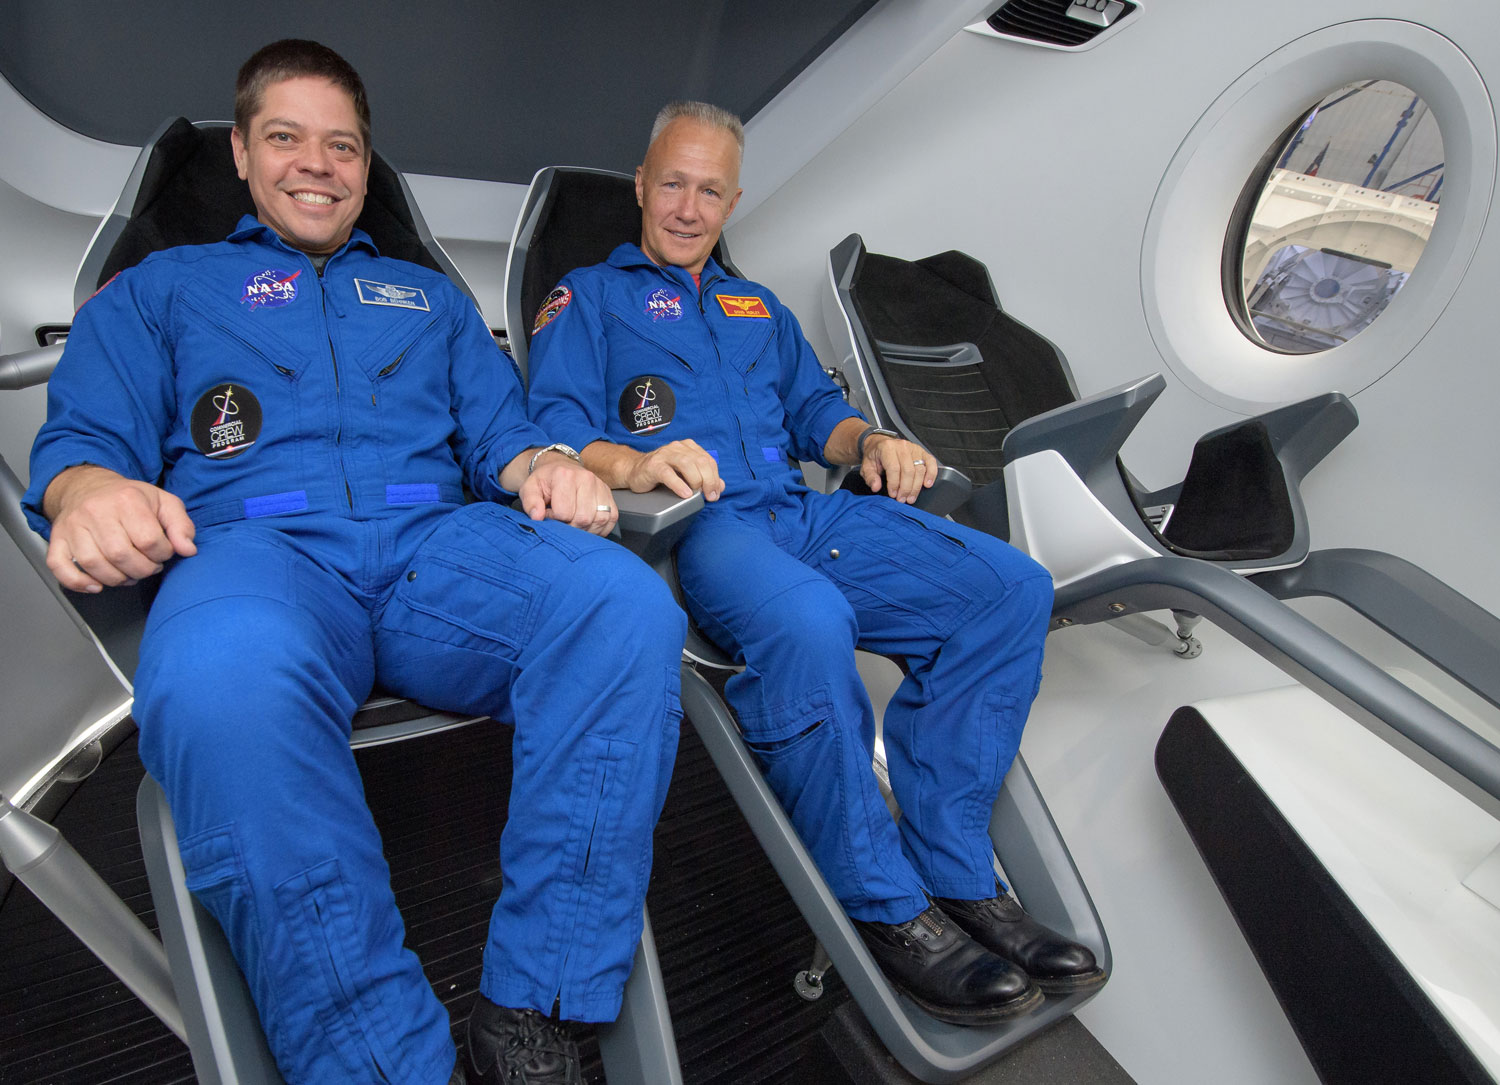 SpaceX crew Bob Behnken and Doug Hurley